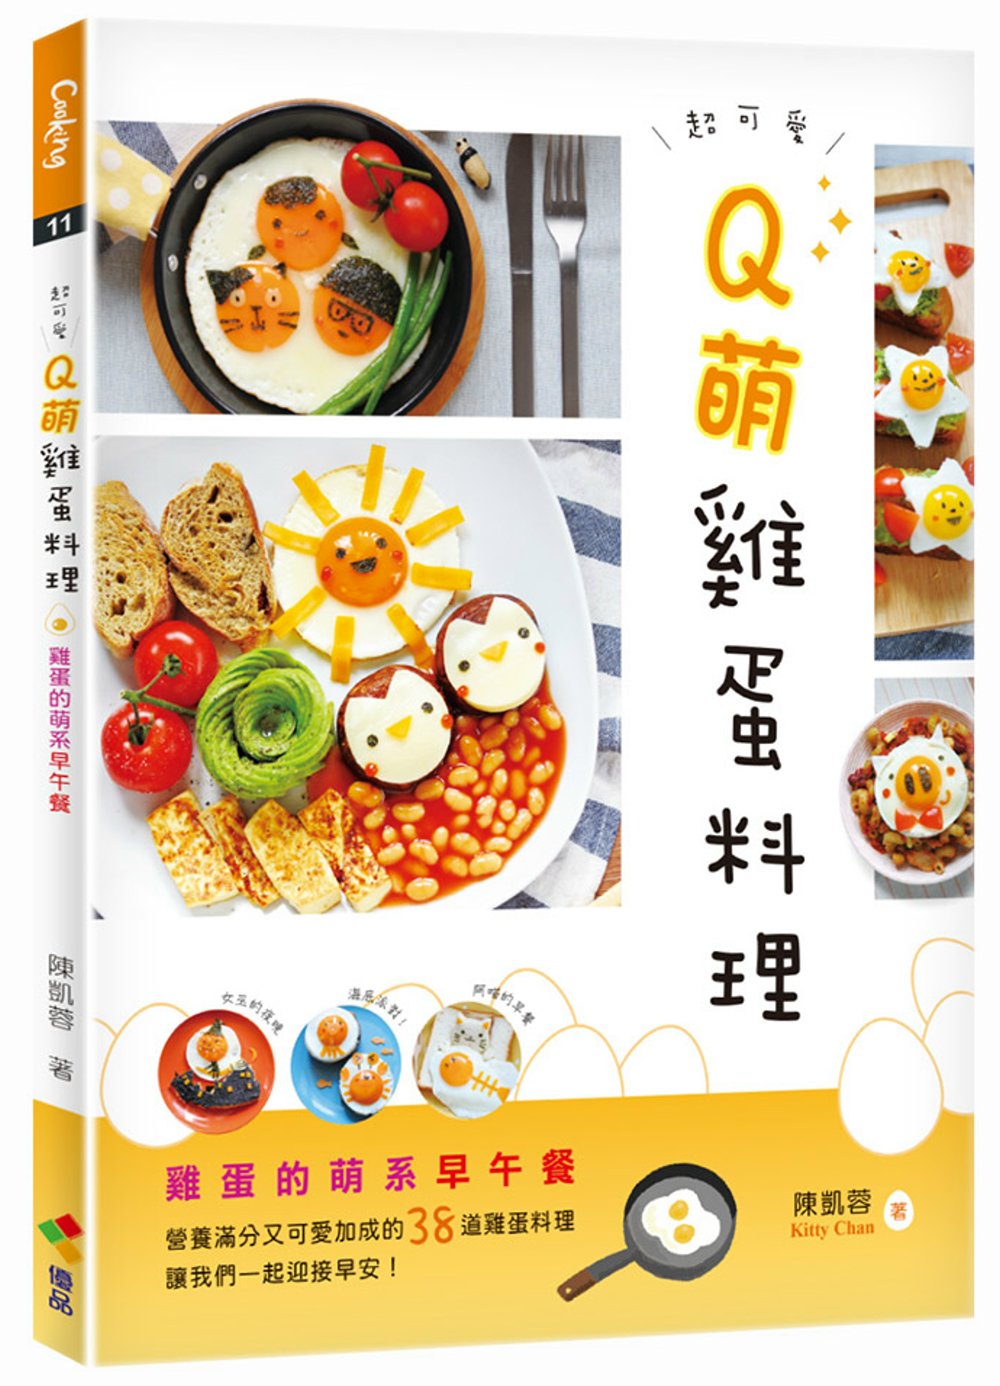 Q萌雞蛋料理：雞蛋的萌系早午餐(贈品版)(限台灣)